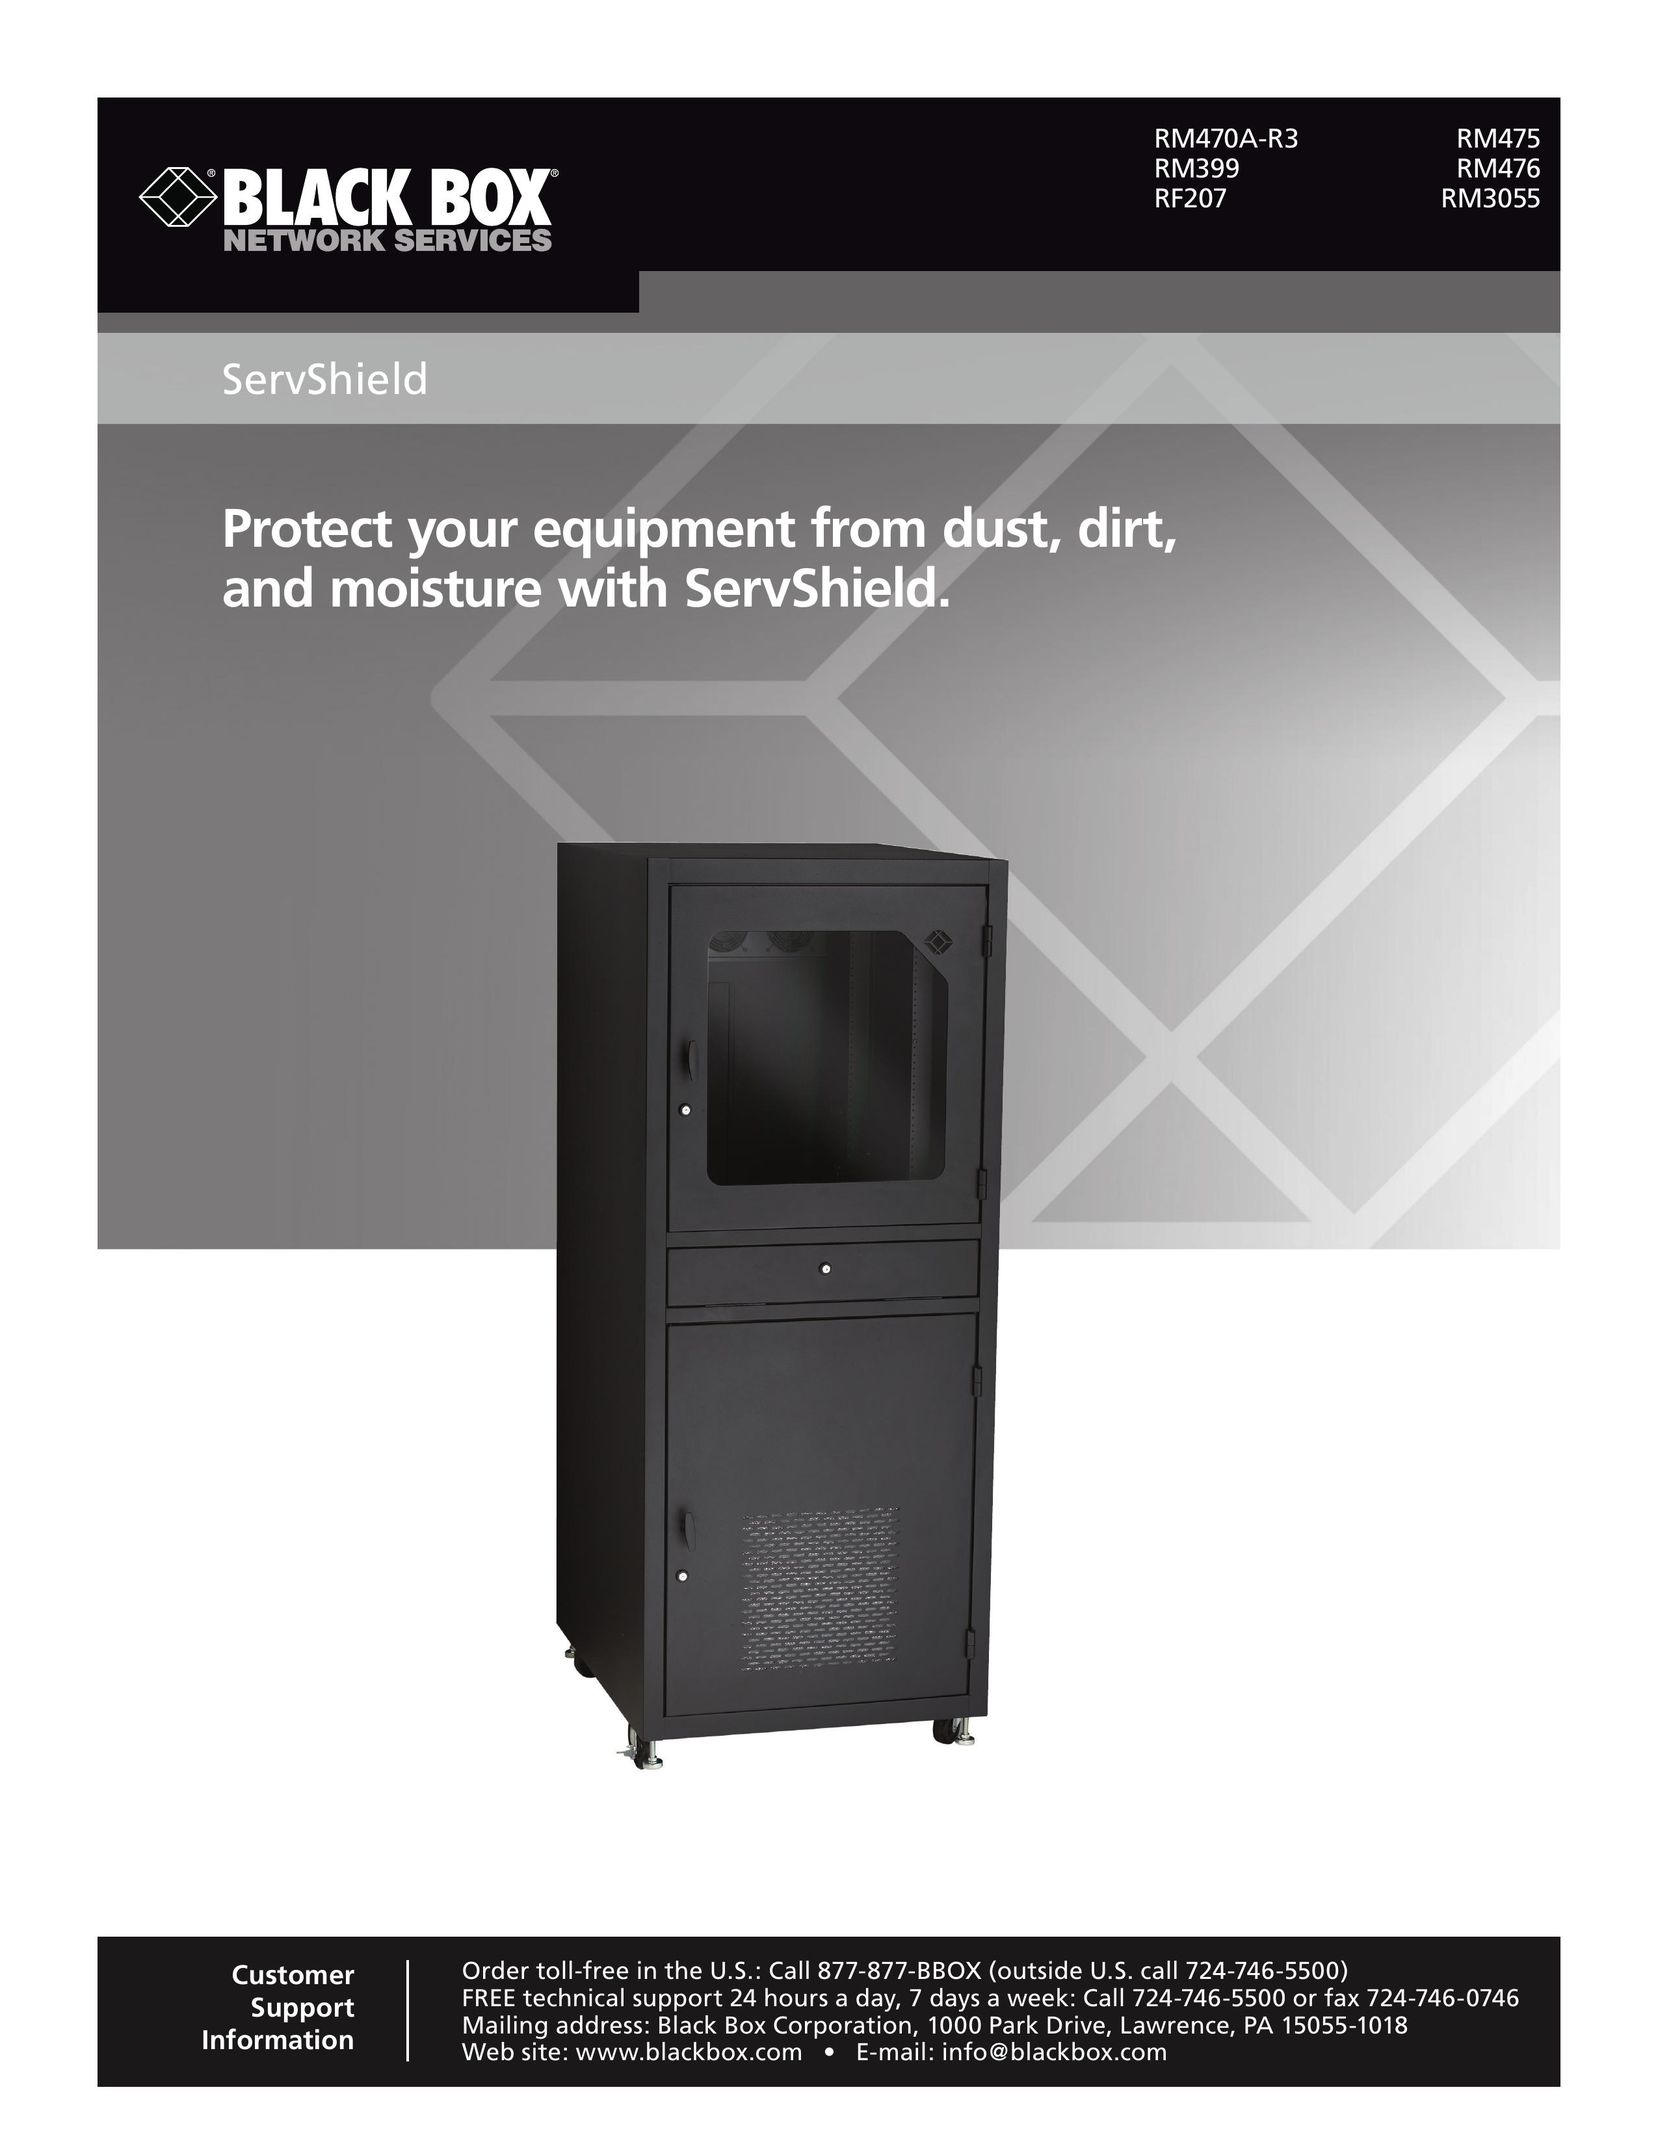 Black Box RM3055 Home Theater Server User Manual